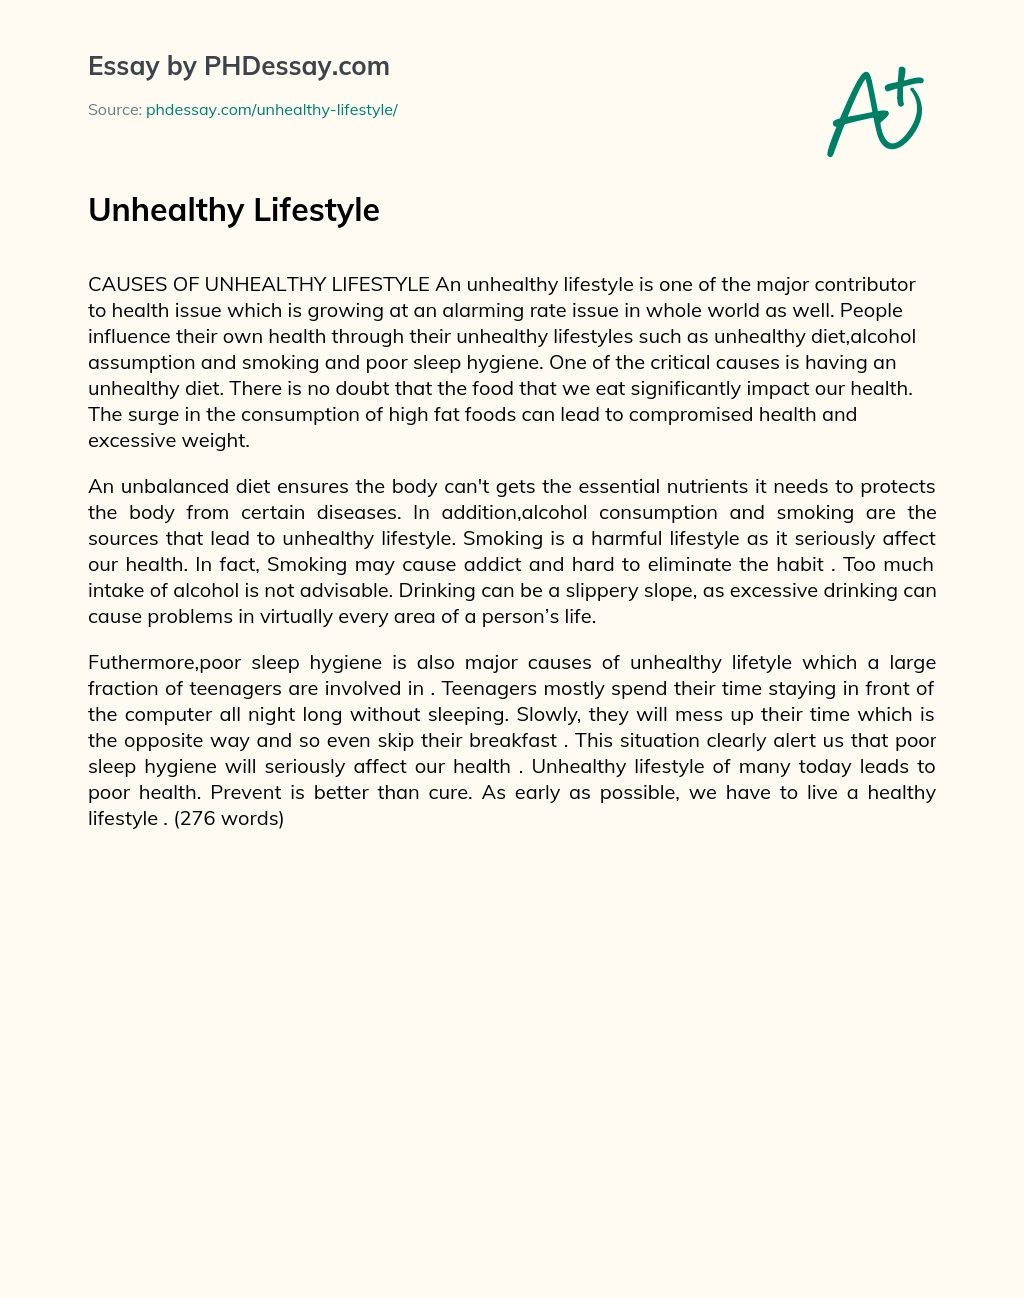 Unhealthy Lifestyle essay